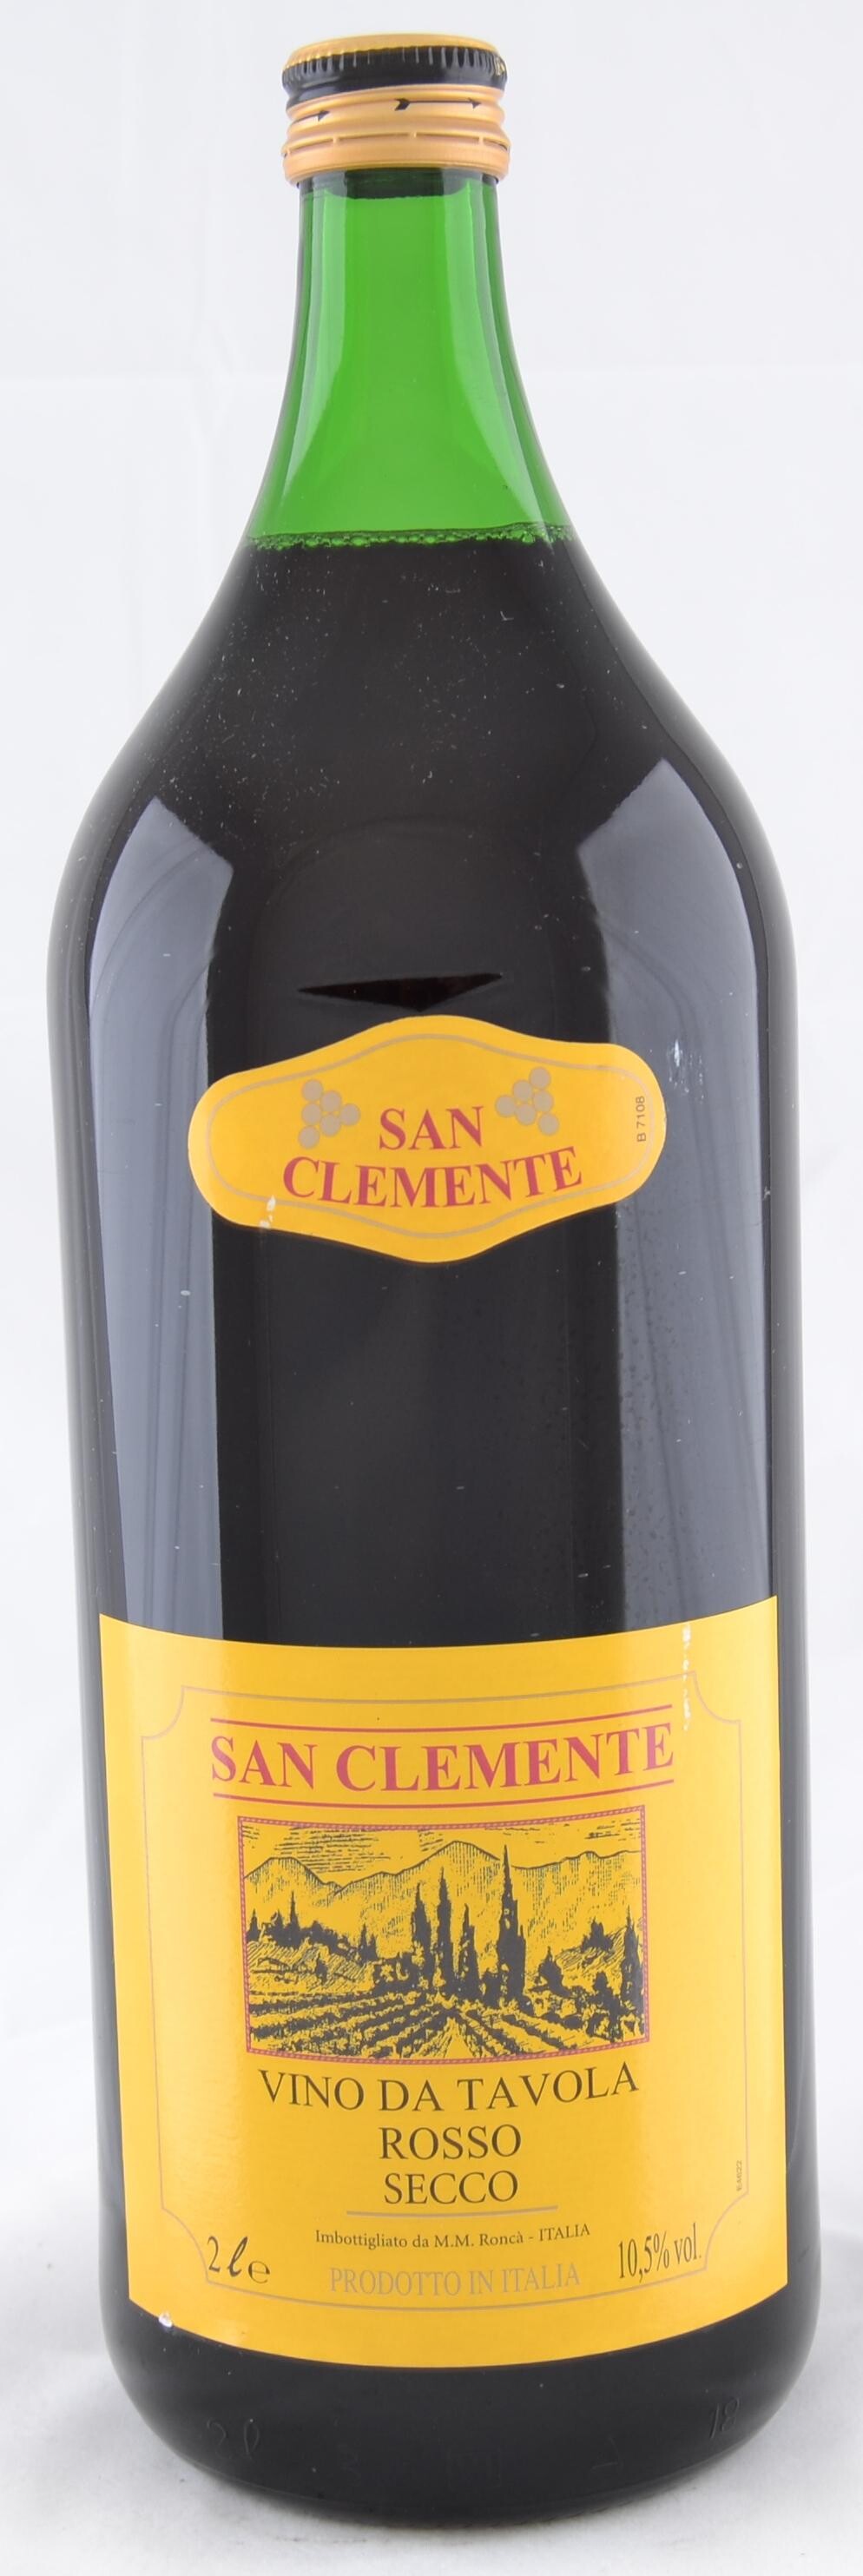 Red Wine San Clemente rosso 2l Vino Tavola